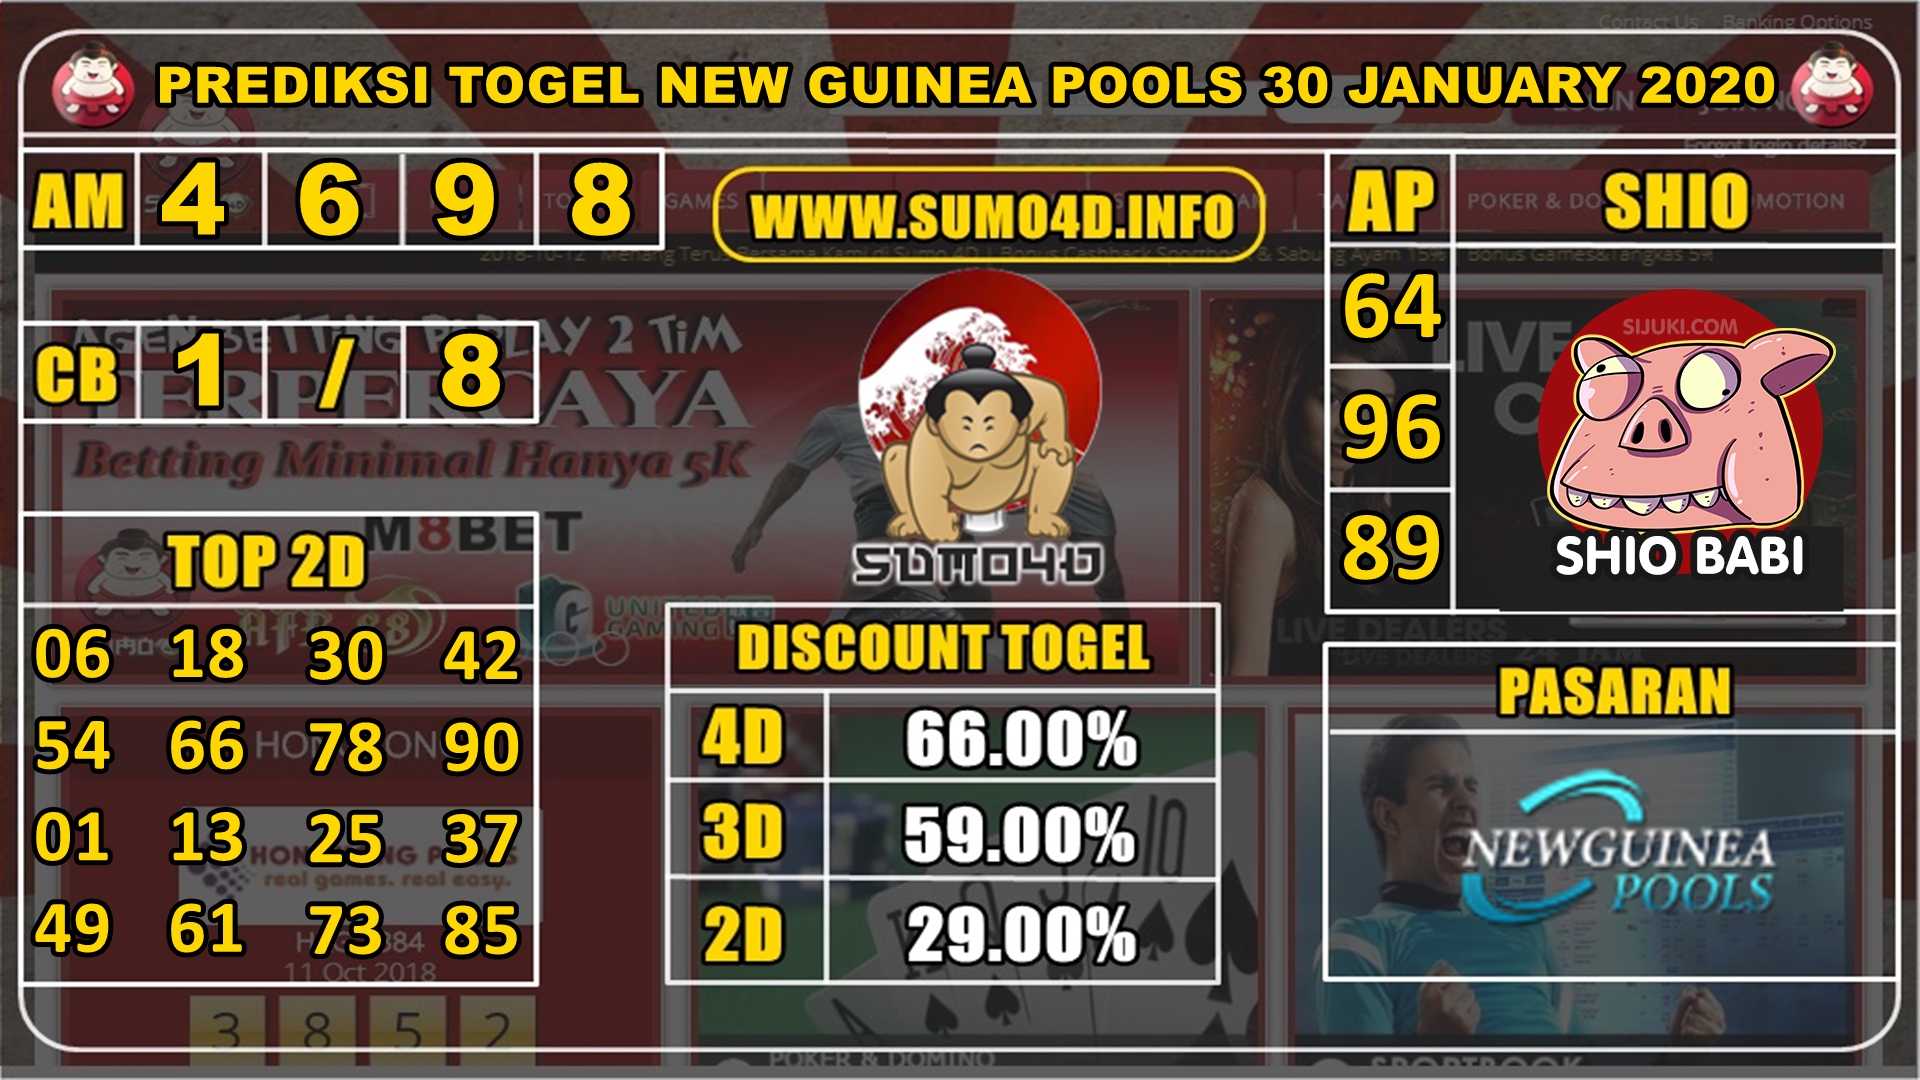 PREDIKSI TOGEL NEW GUINEA POOLS 30 JANUARY 2020